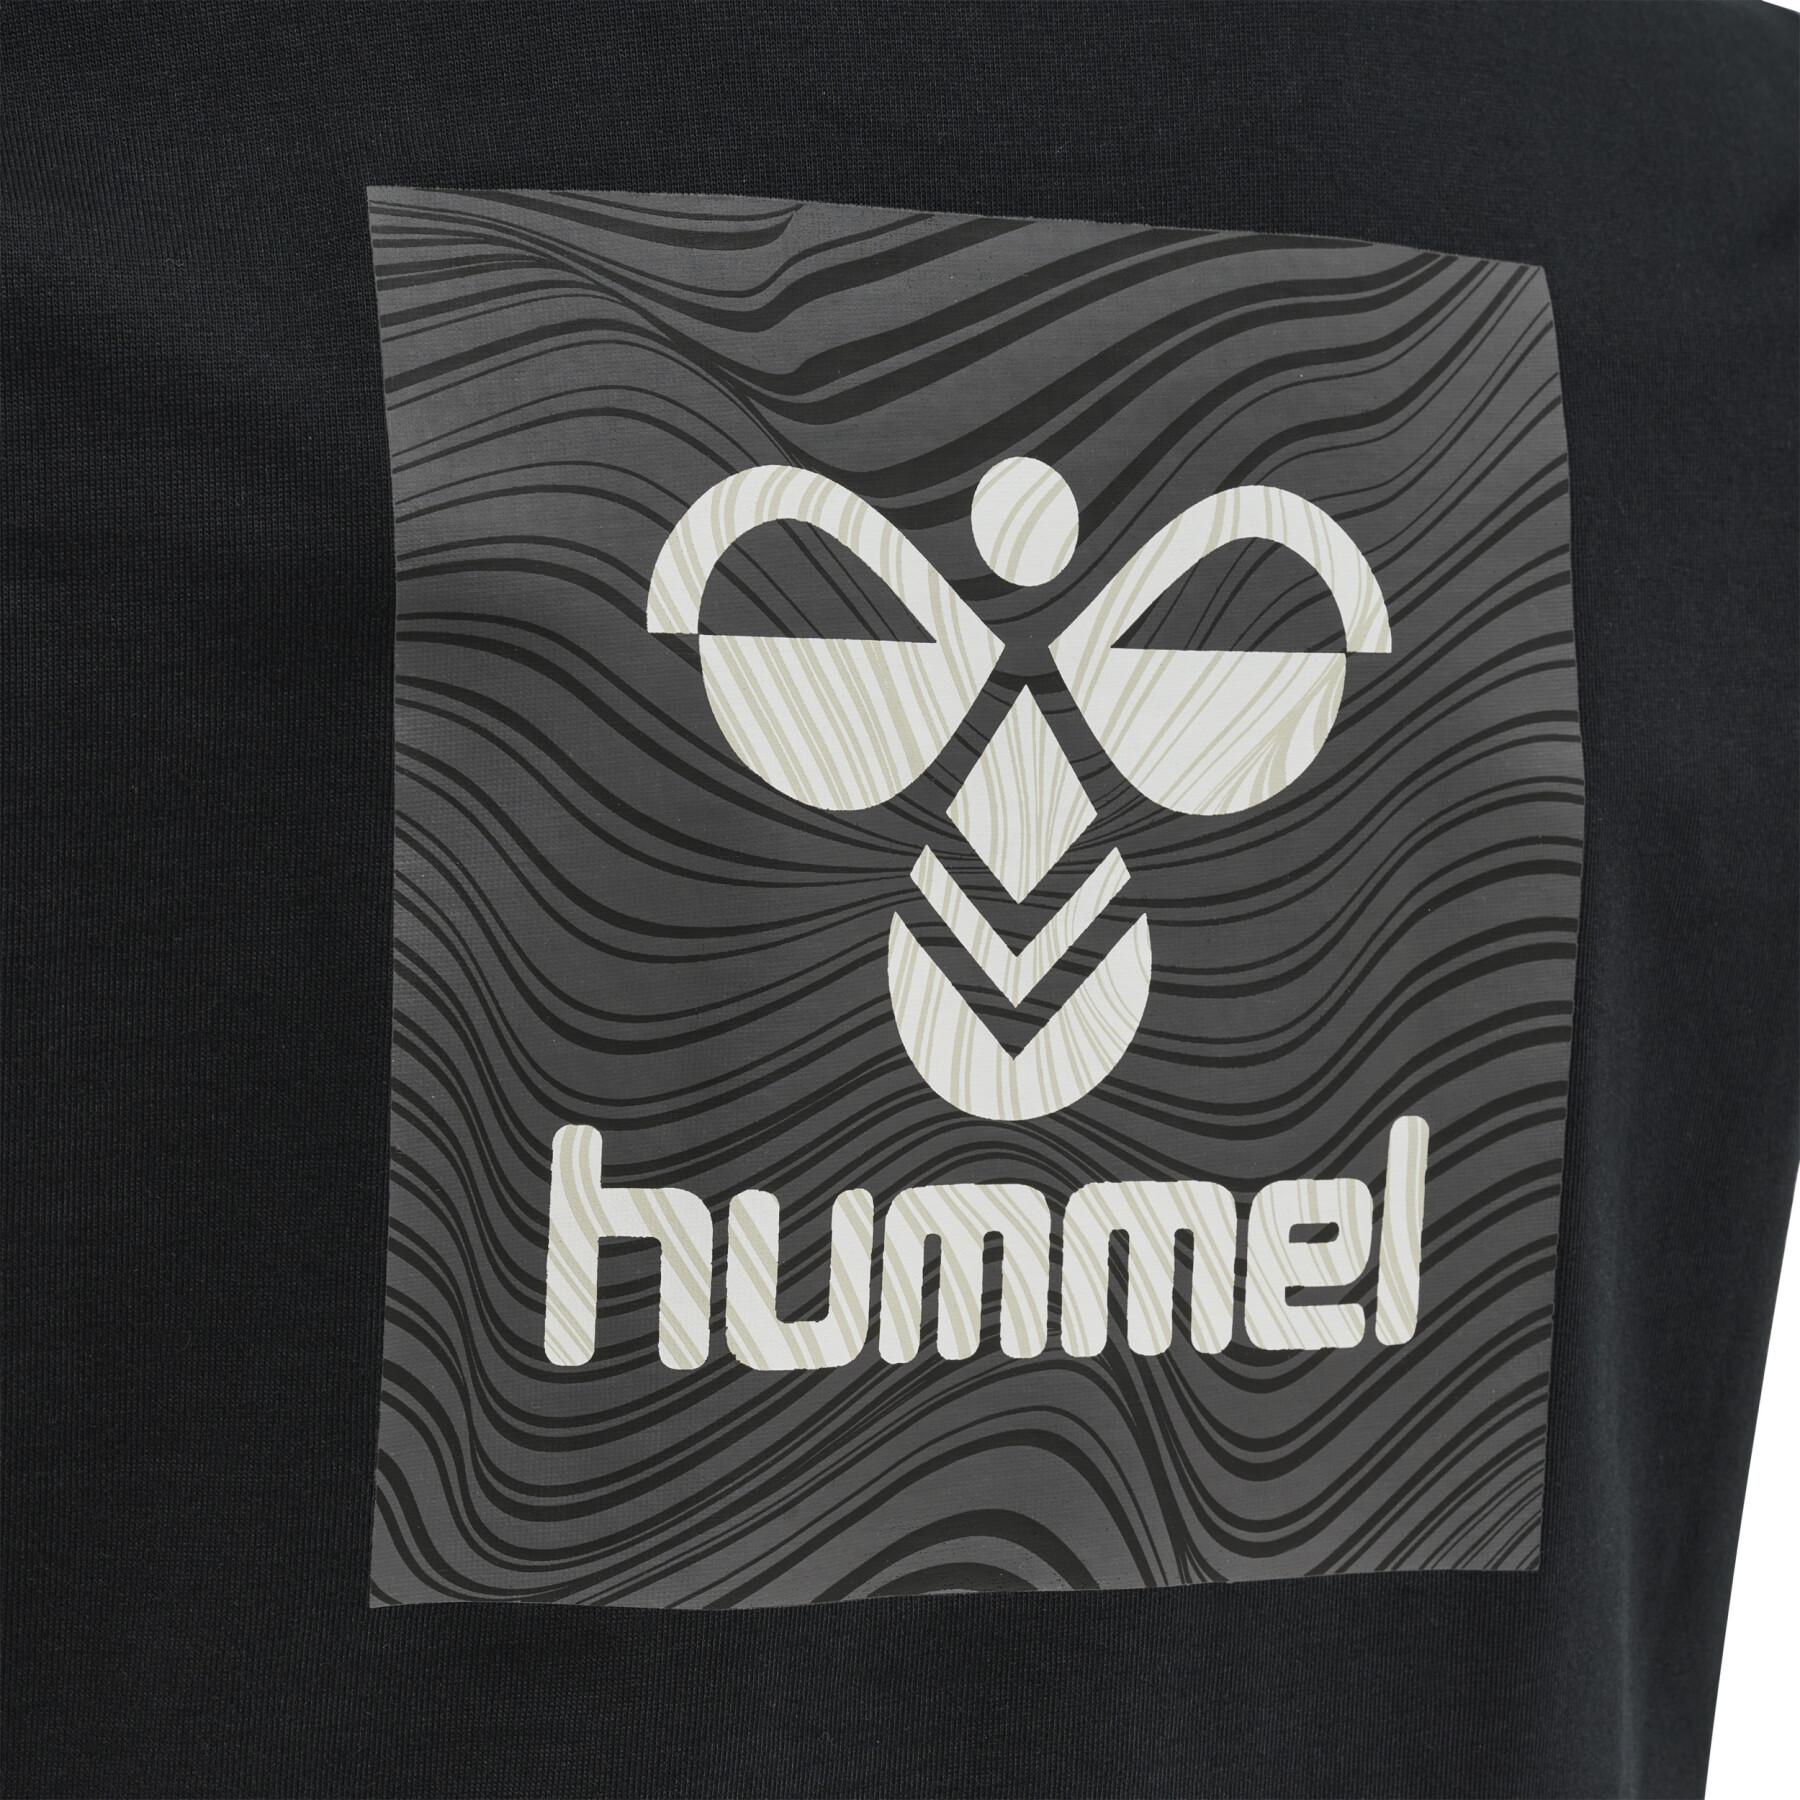 Child's T-shirt Hummel OFF - Grid